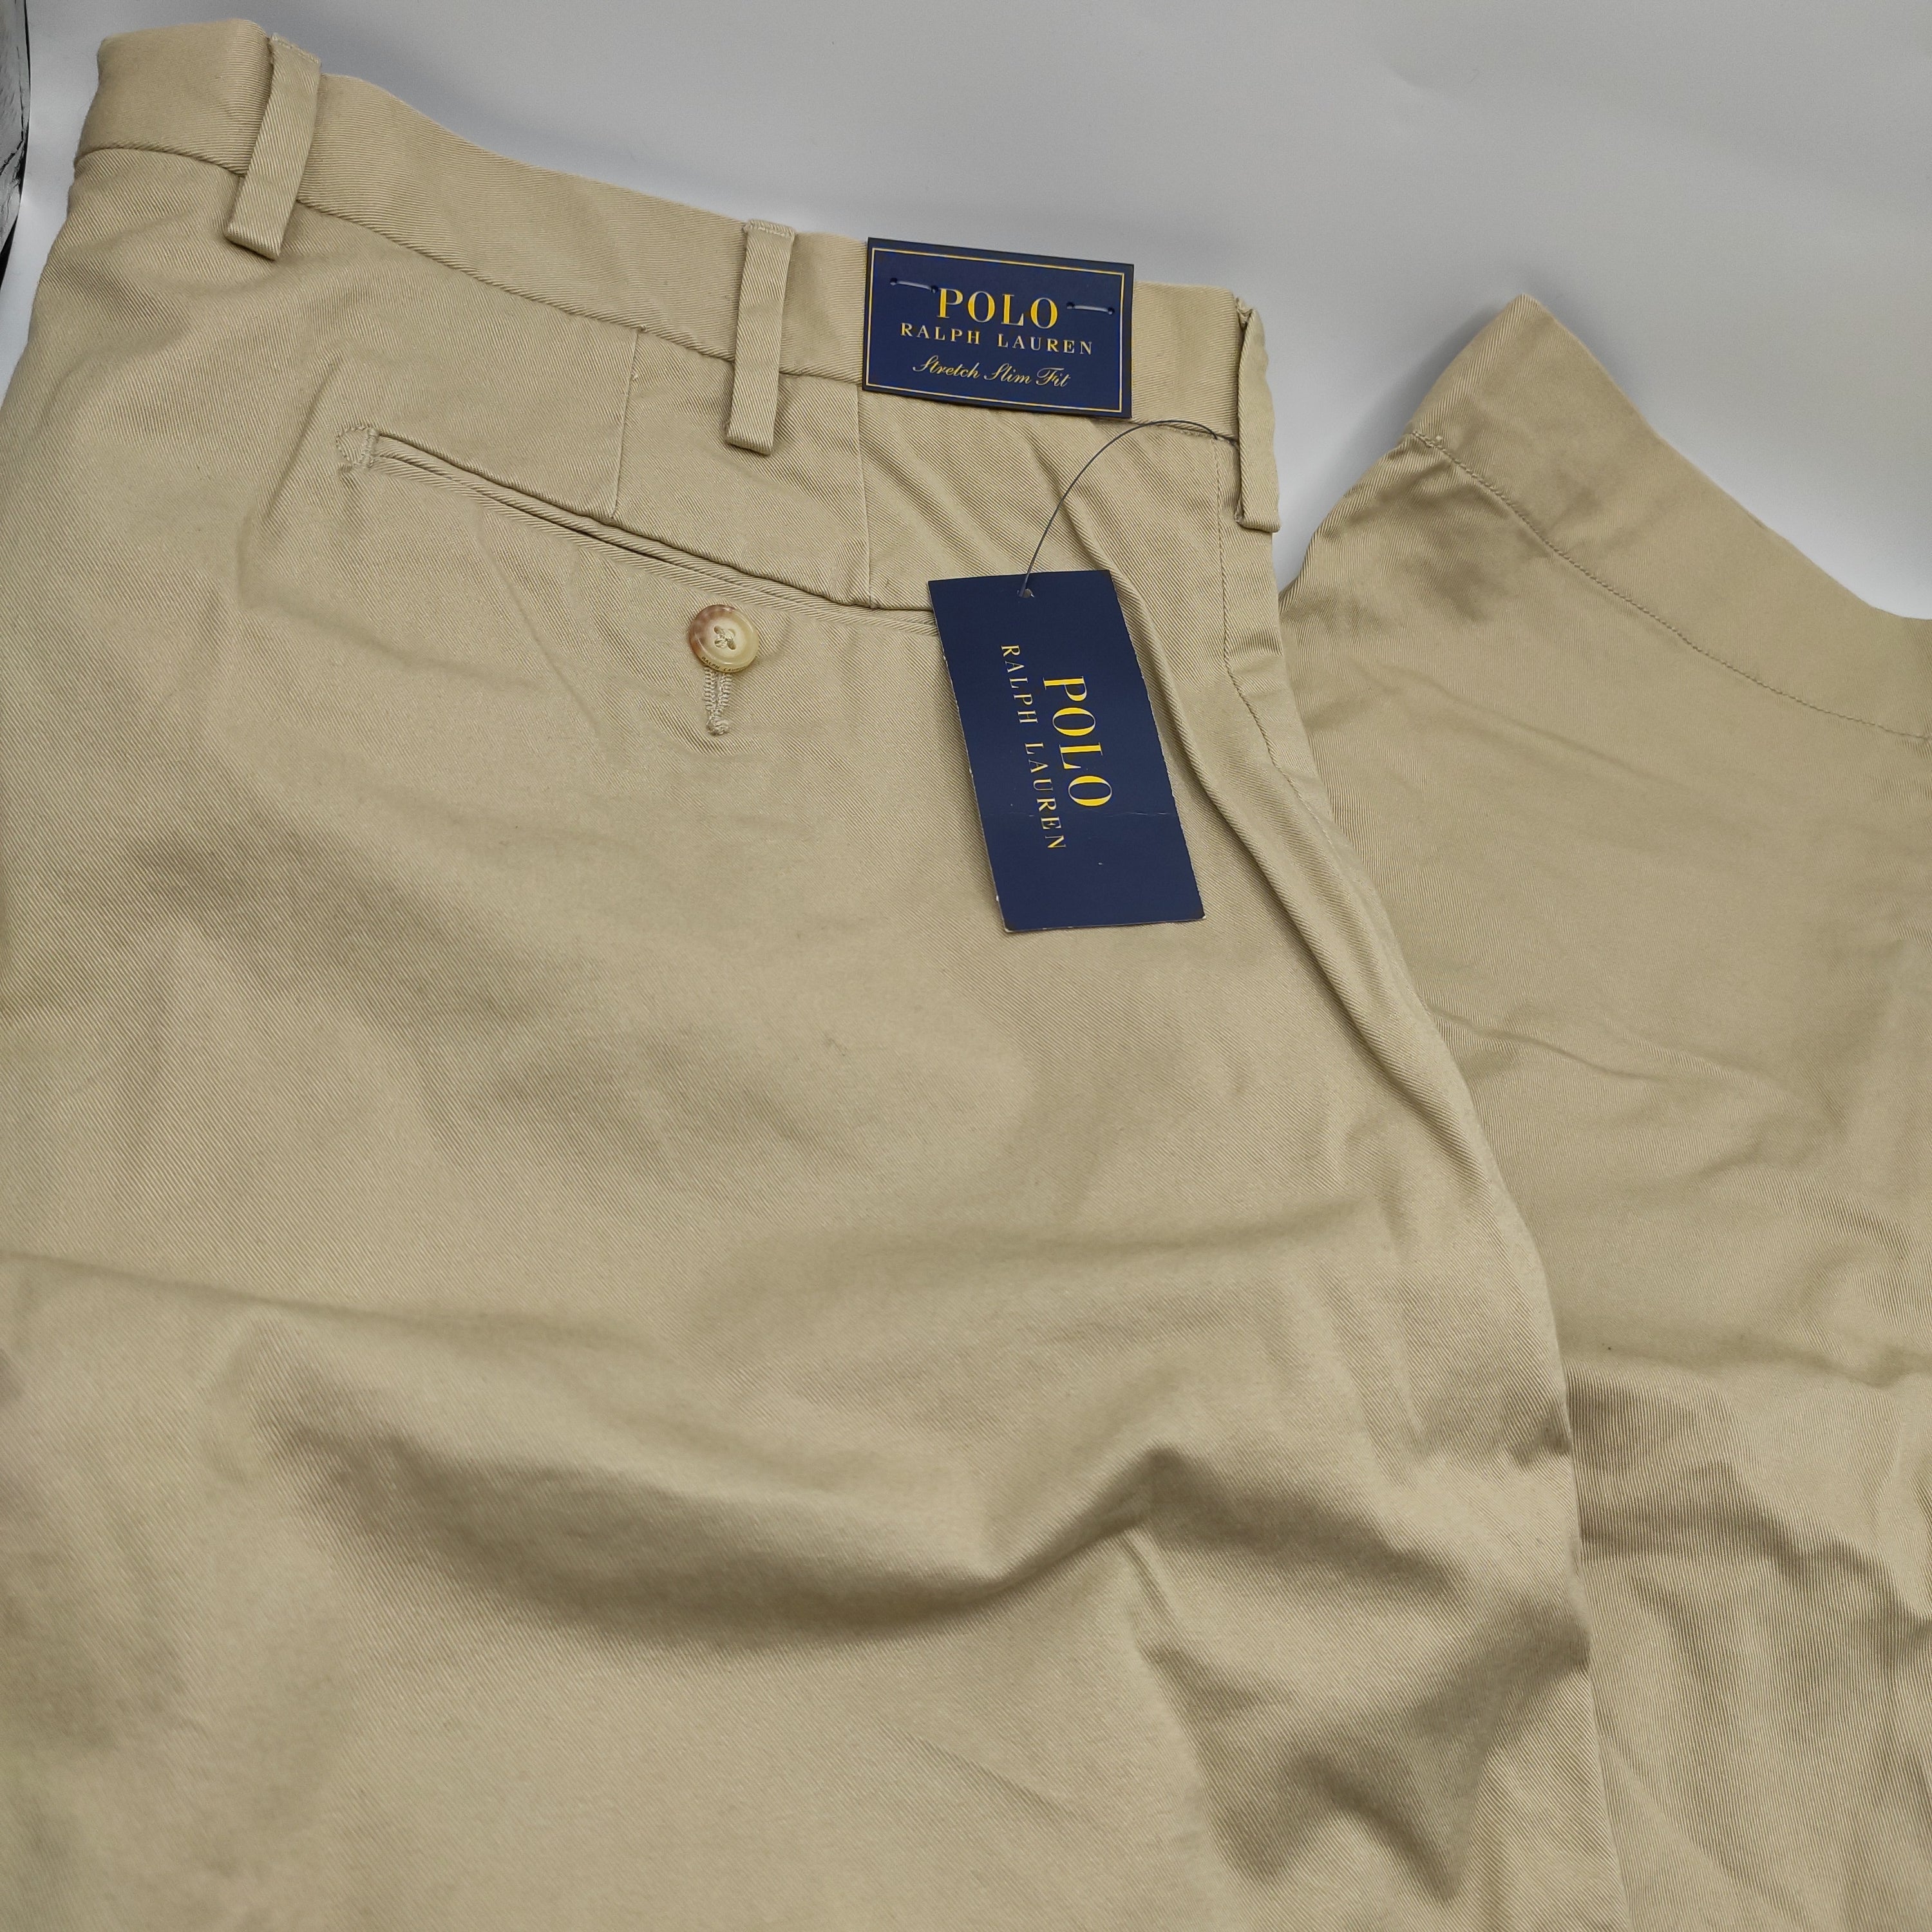 RALPH LAUREN CHINO Trousers  W31 L34  Beige  Great Condition  Mens   eBay